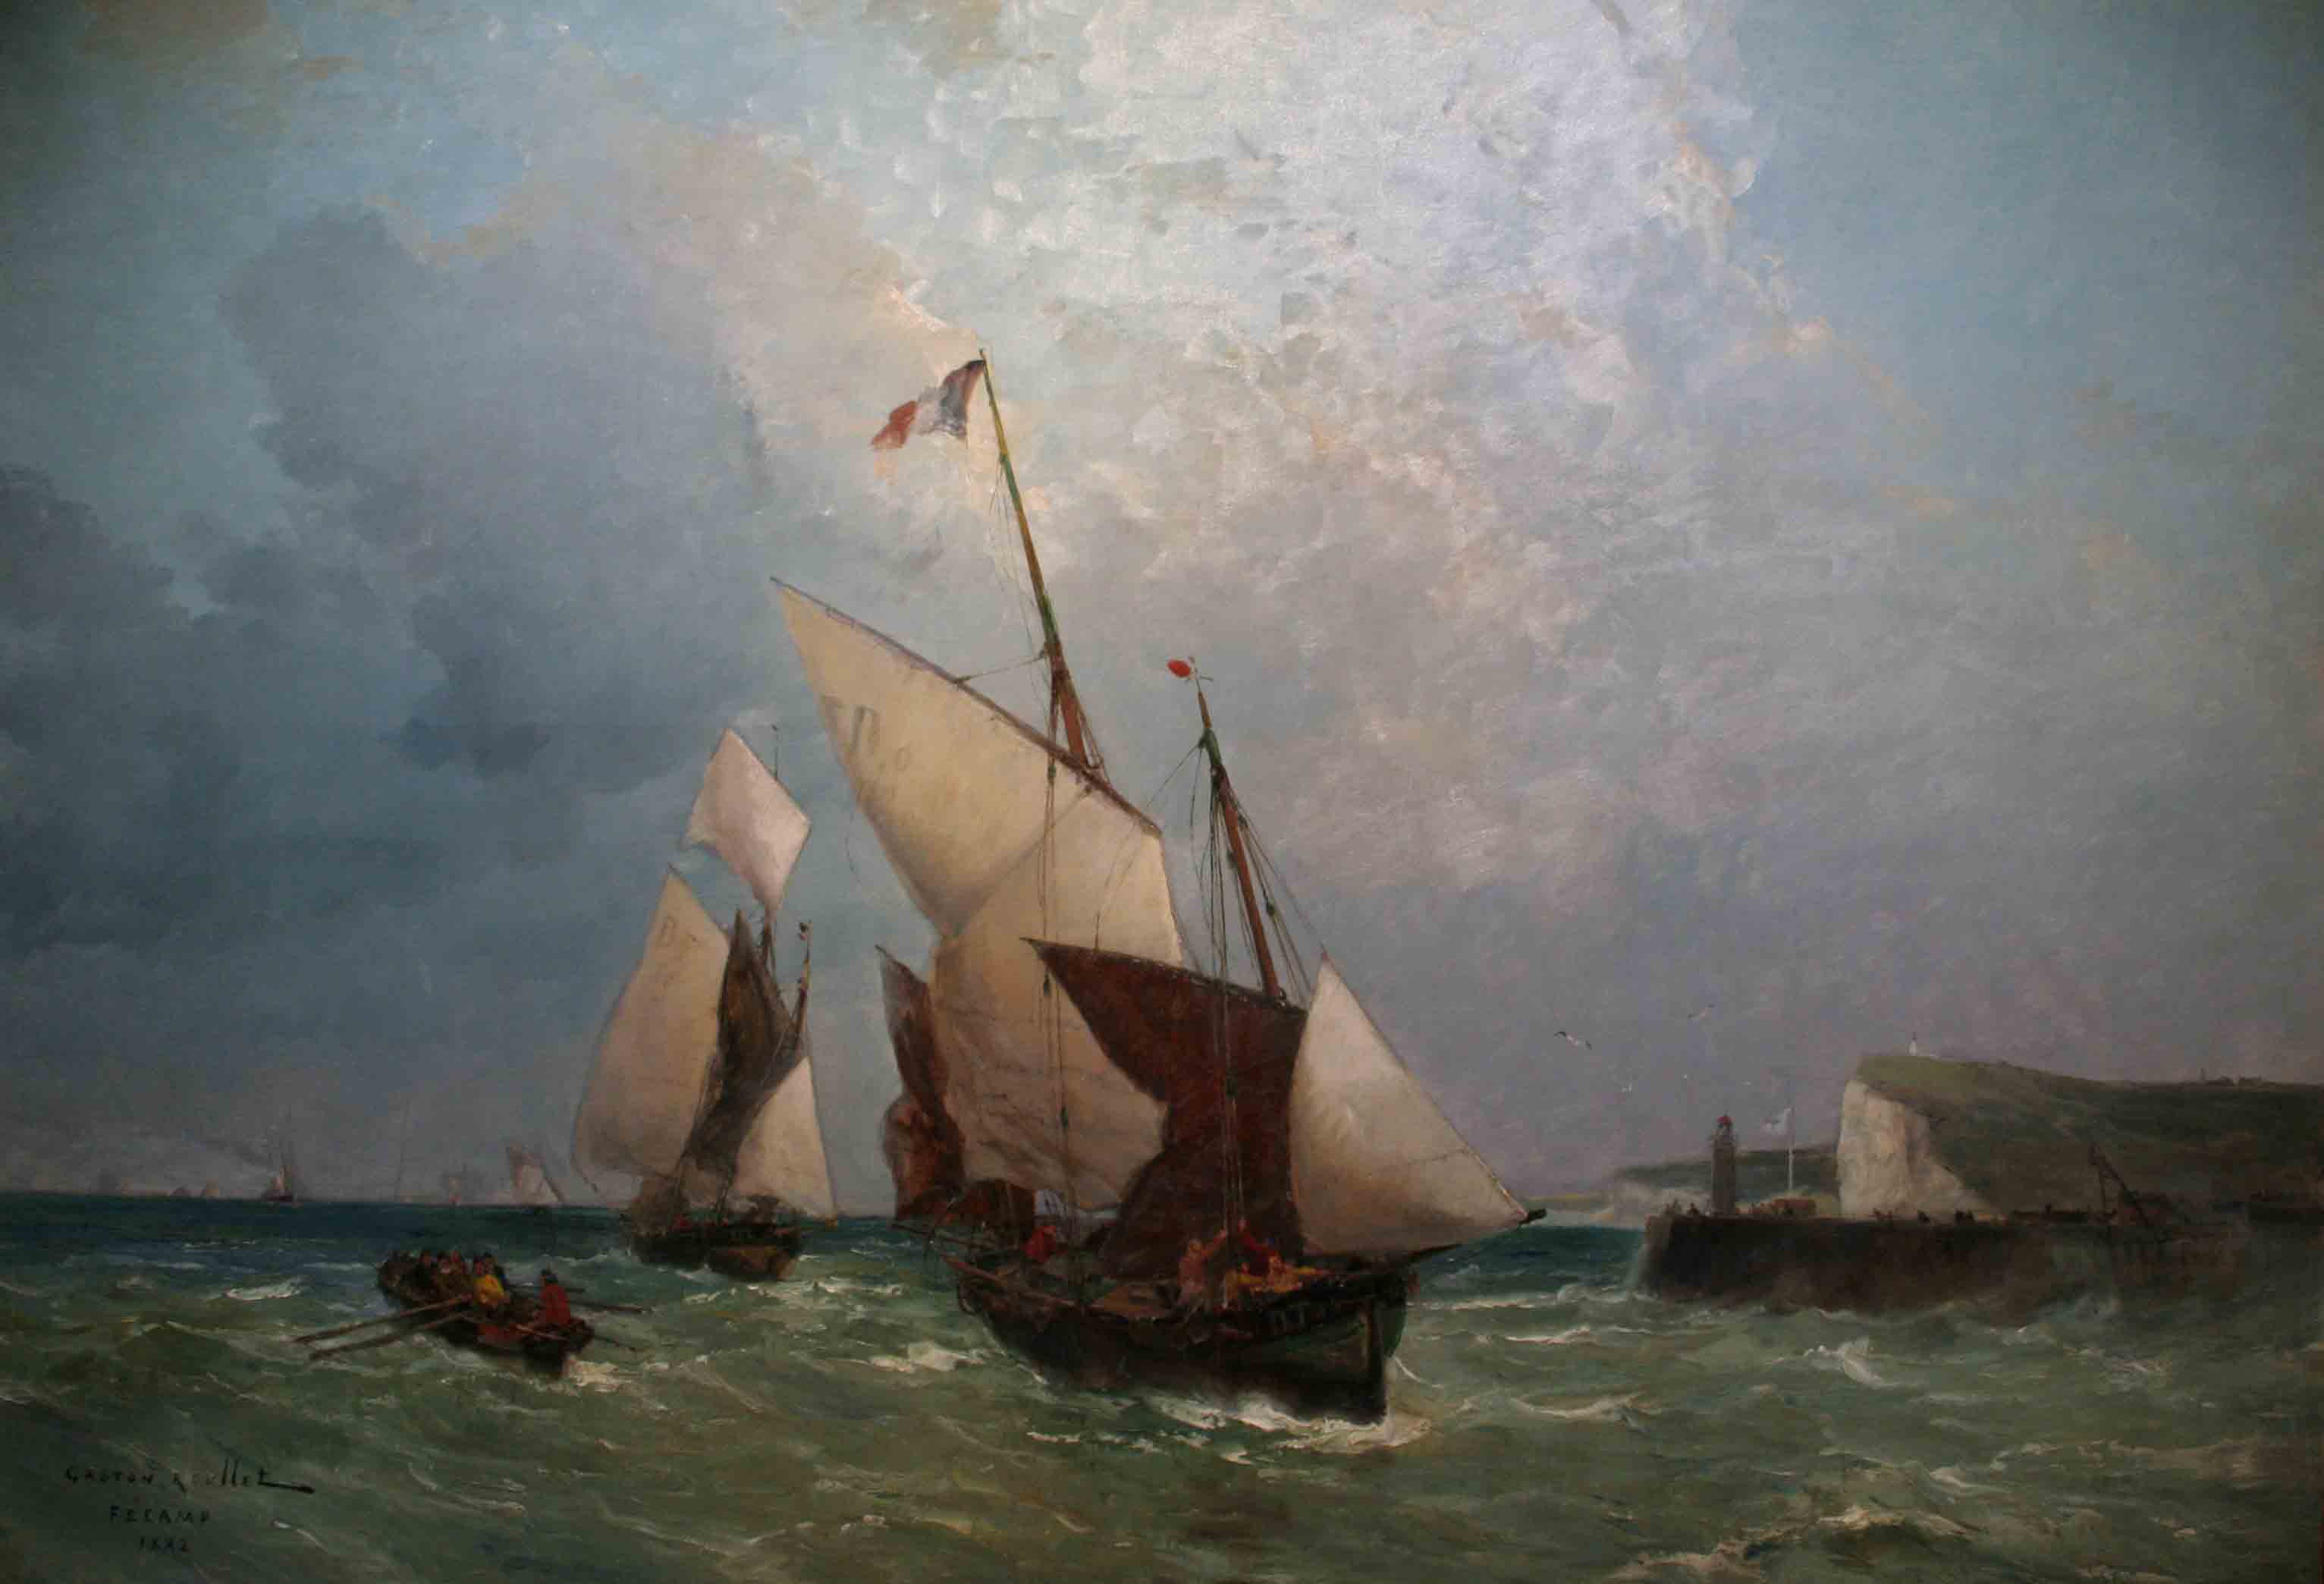 Gaston Roullet, "Fishing boat" 